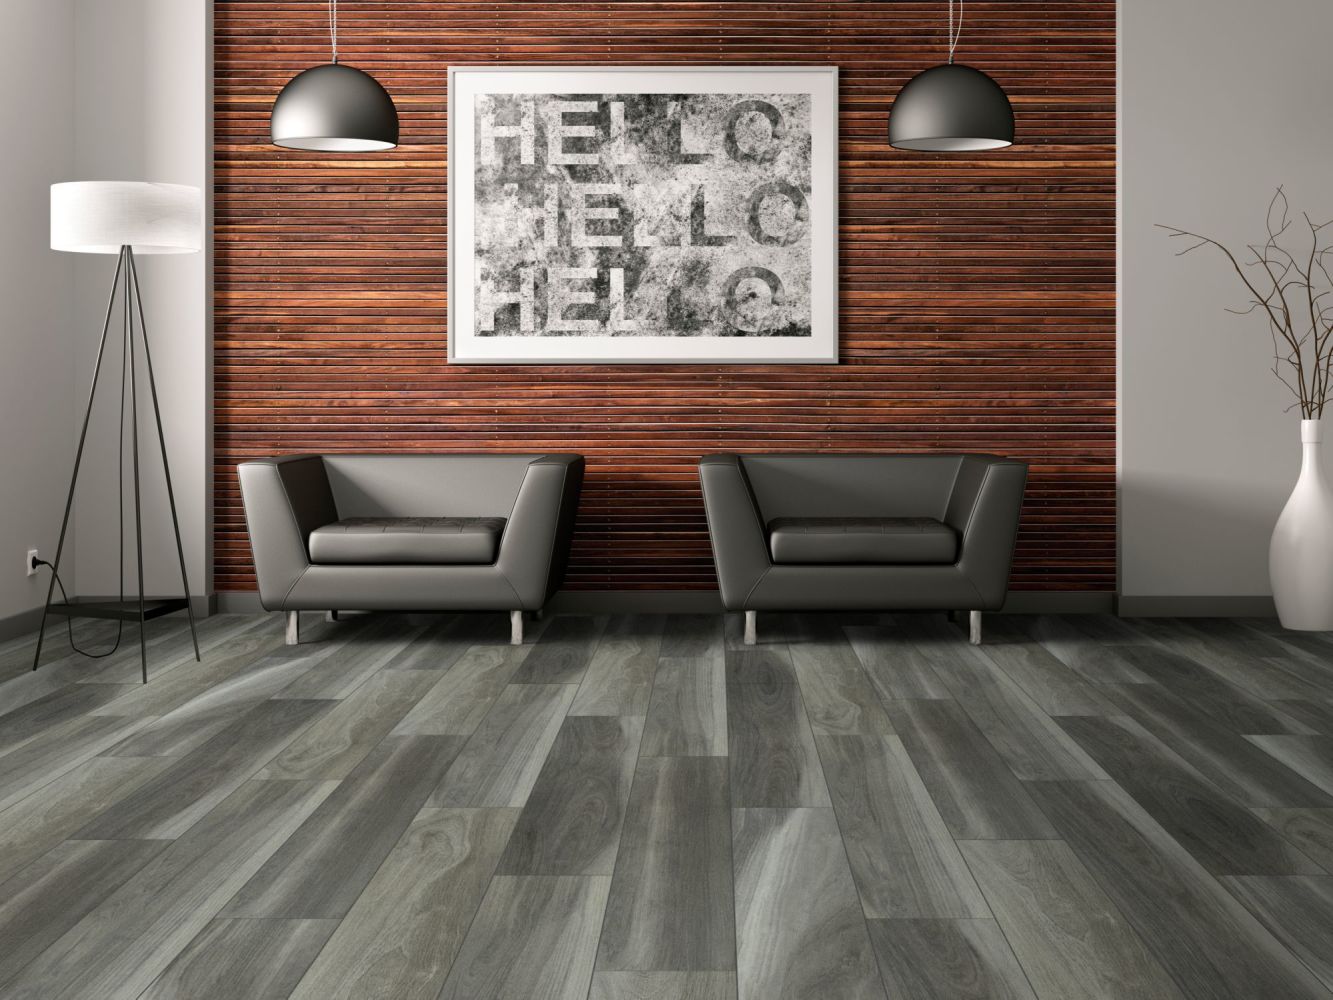 Shaw Floors Resilient Property Solutions Barrel Oak 720c Plus Charred Oak 05009_515RG